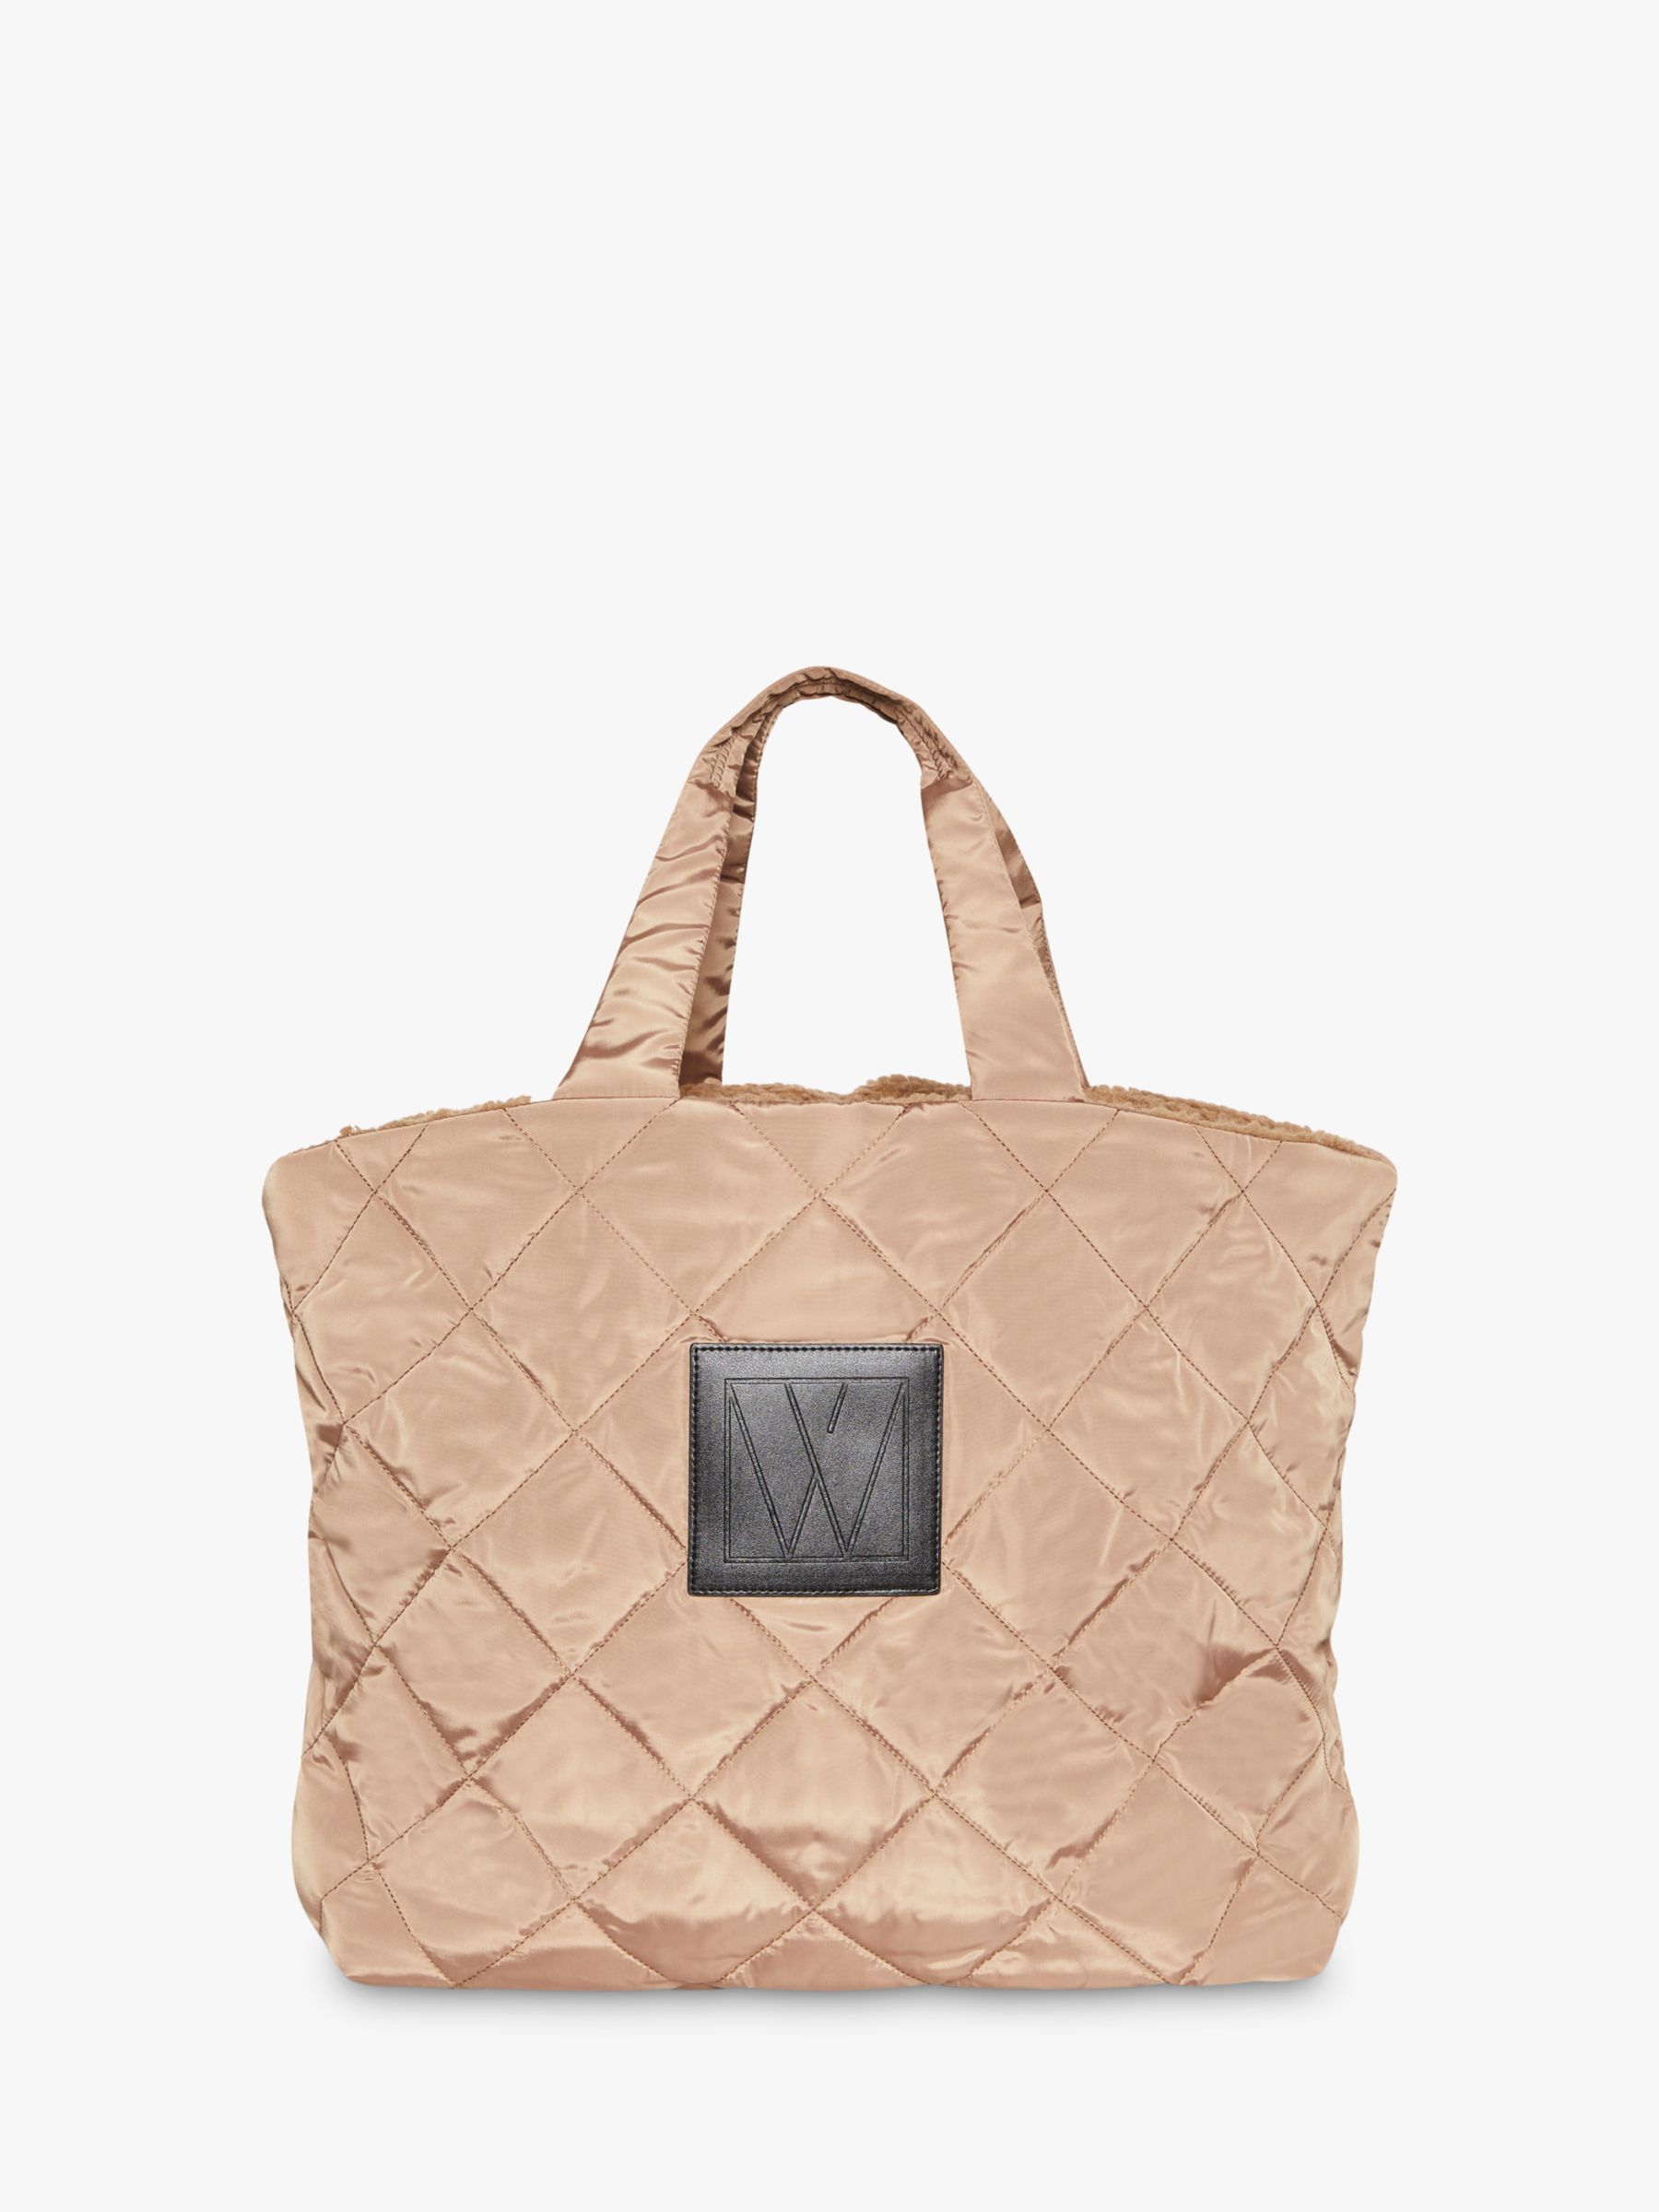 InWear Jessica Shopper Bag, Camel at John Lewis & Partners